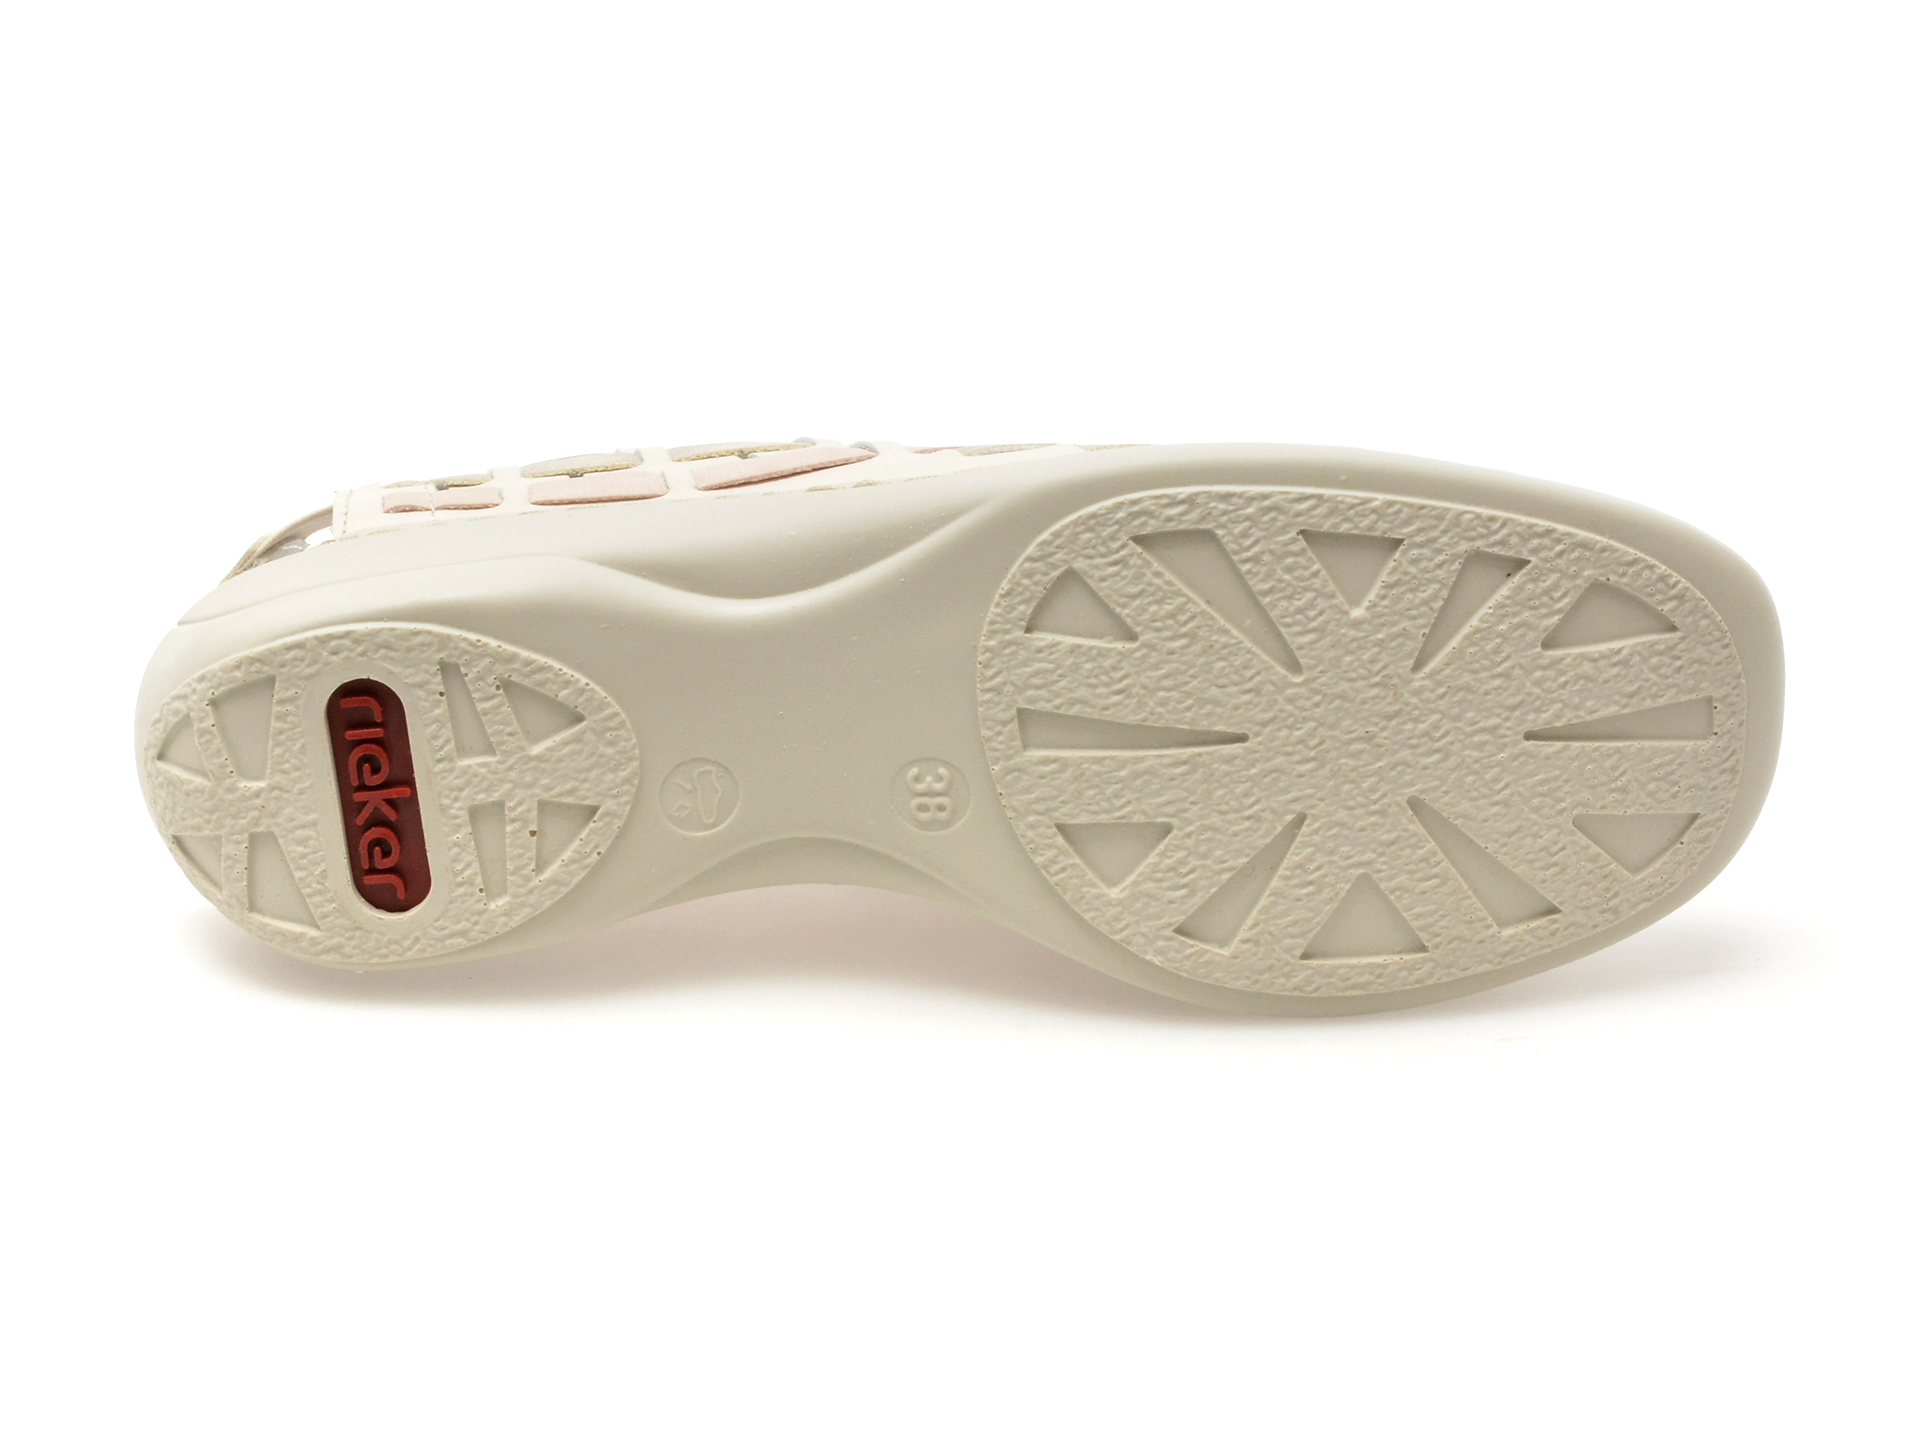 Pantofi Casual RIEKER albi, 413V8, din piele naturala